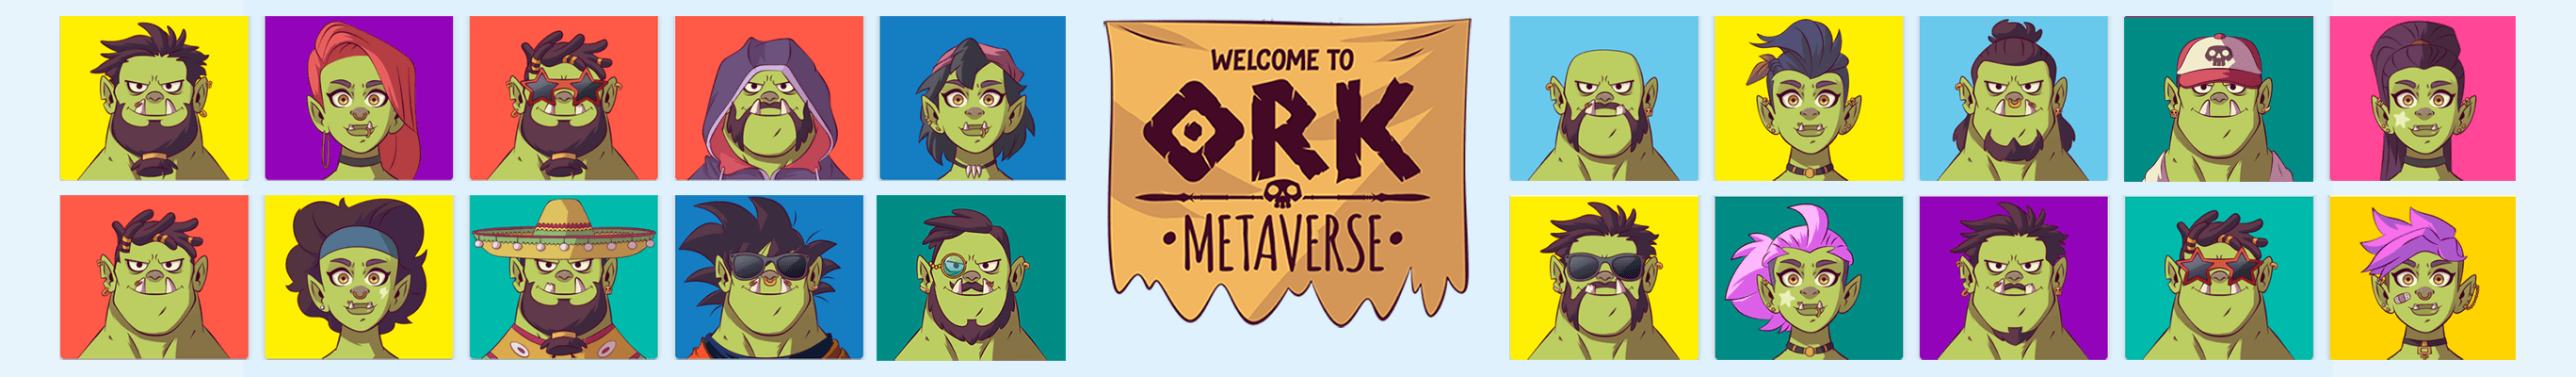 OrkMetaverse banner